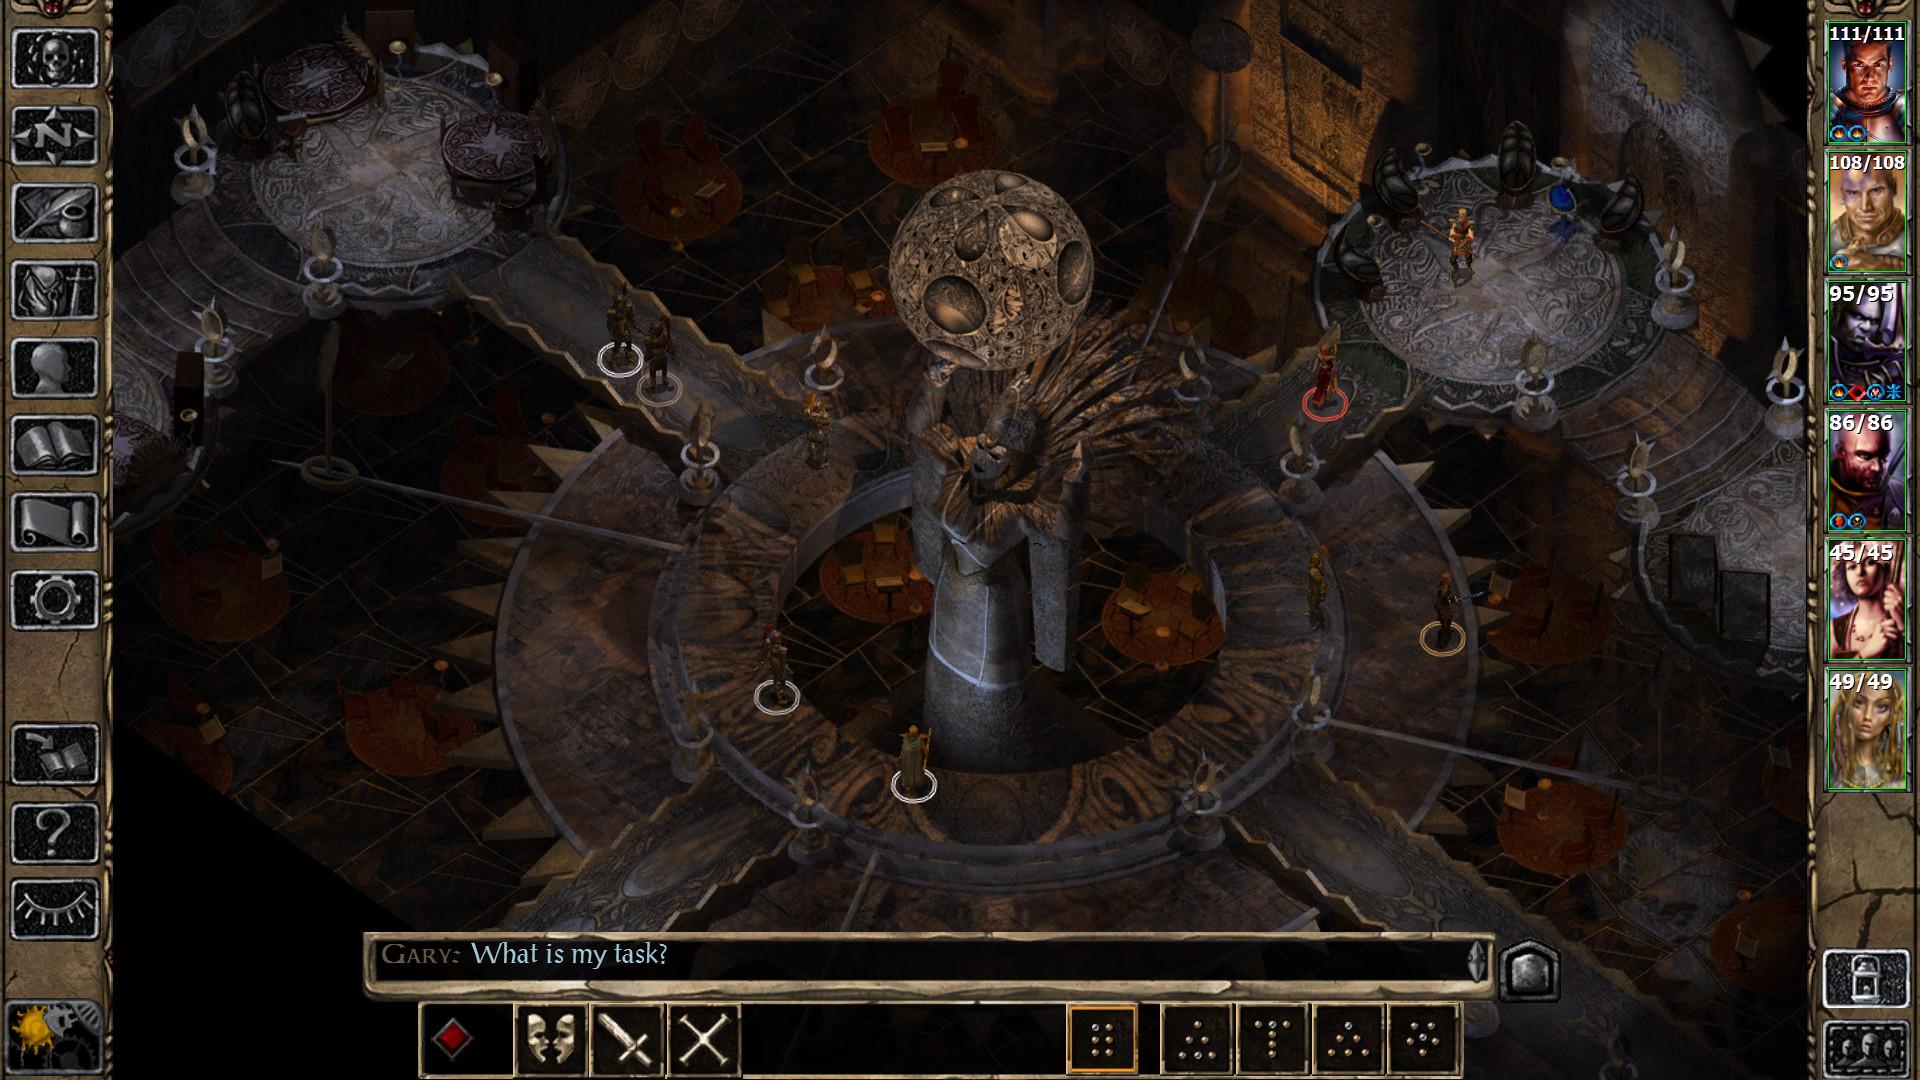 Screenshot №3 from game Baldur's Gate II: Enhanced Edition